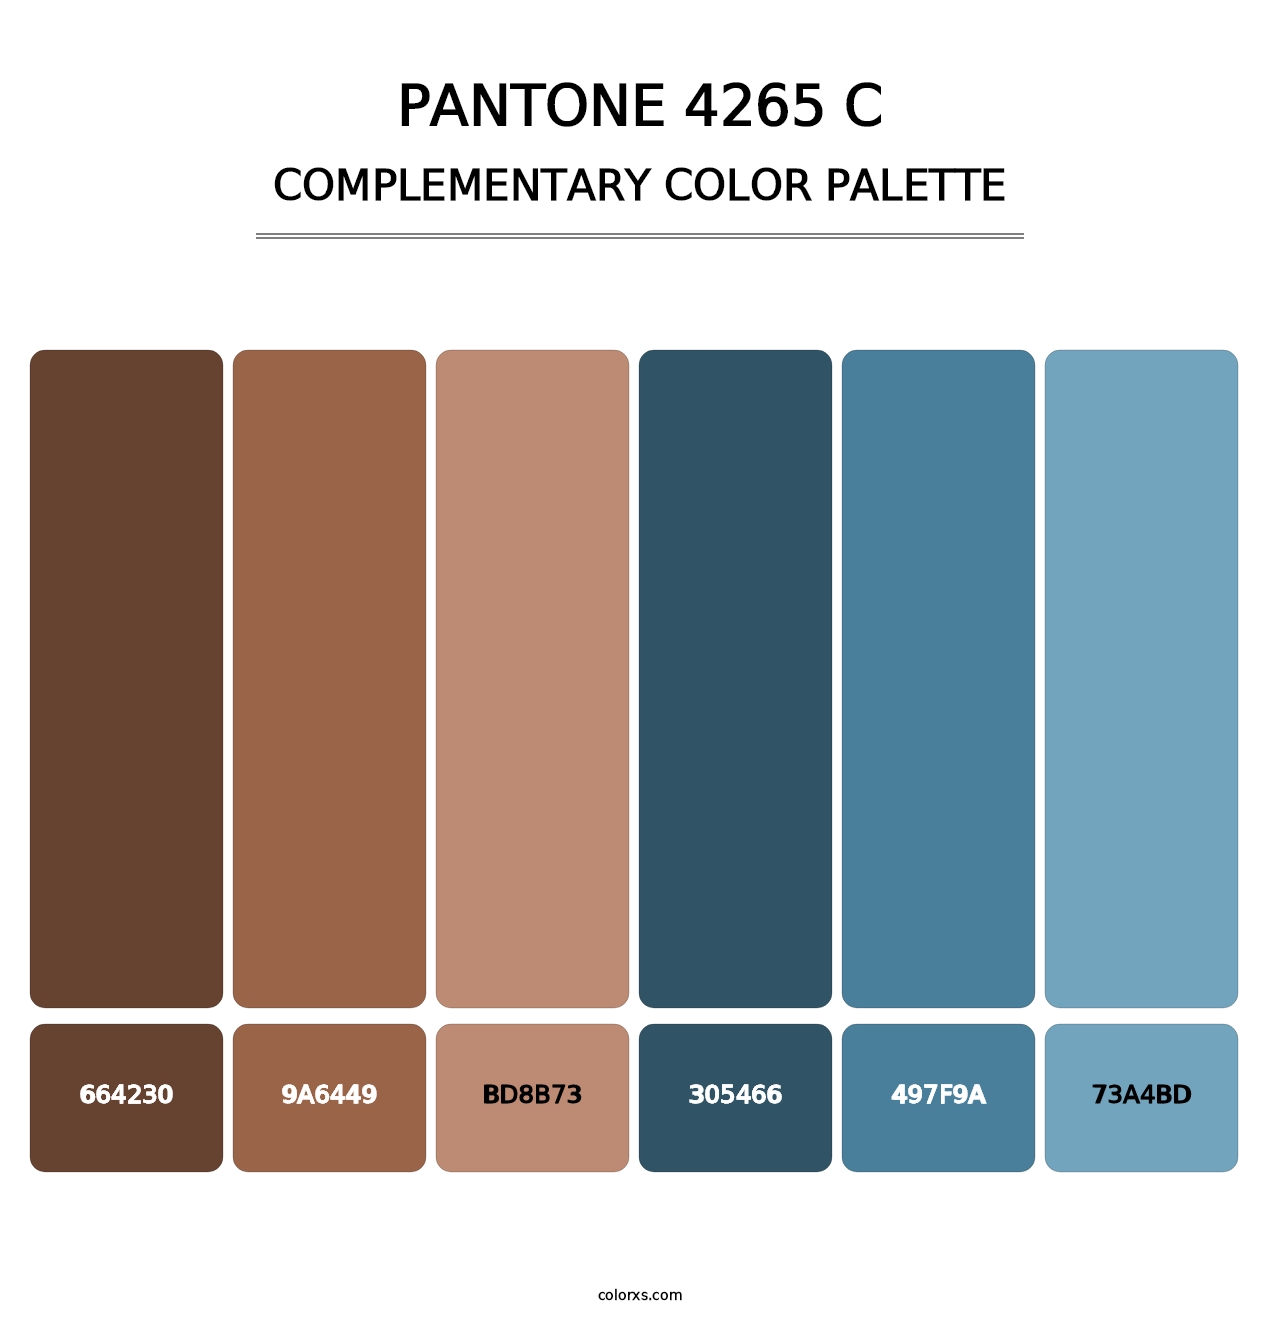 PANTONE 4265 C - Complementary Color Palette